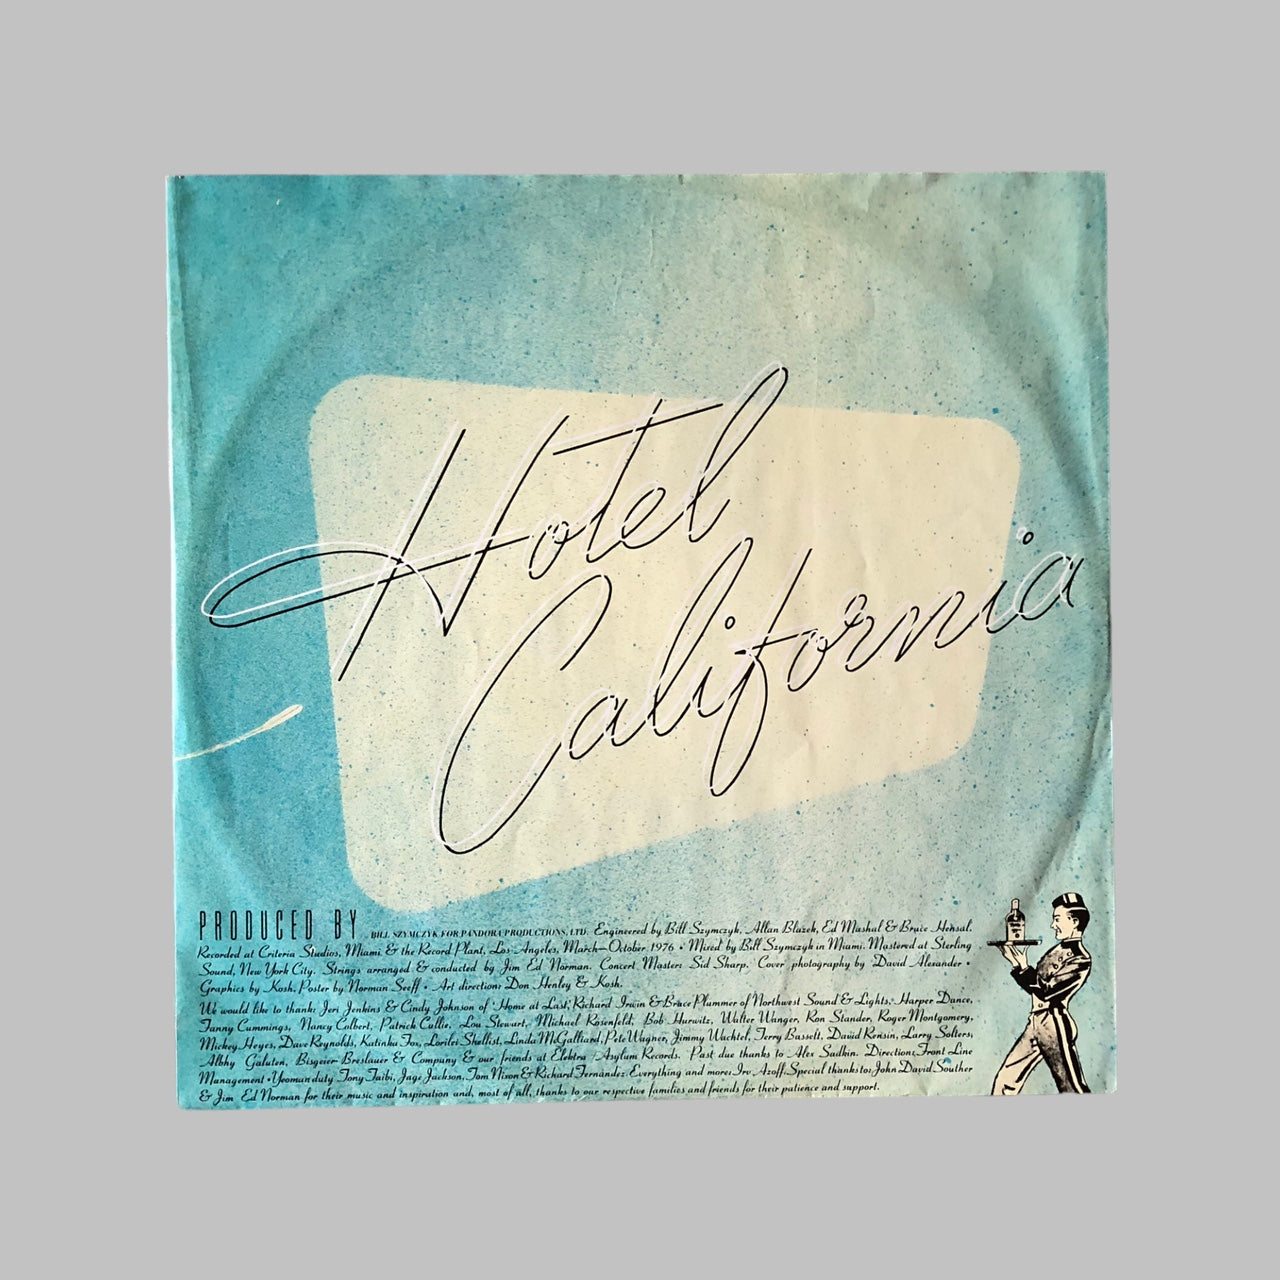 LP Vinyl - The Eagles - Hotel California.